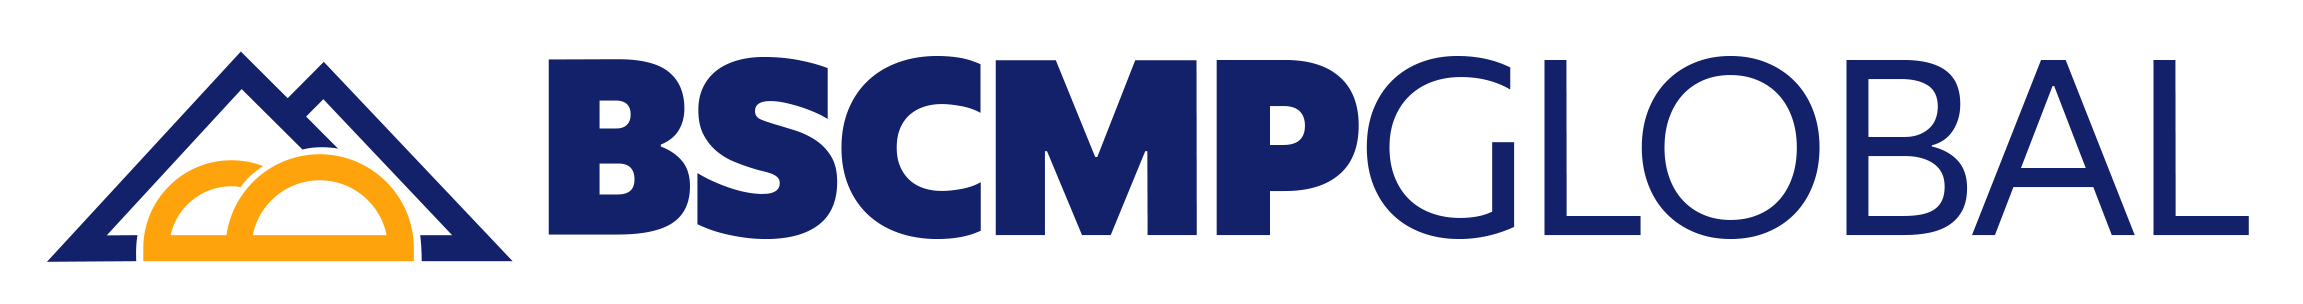 BSCMP Global Logo